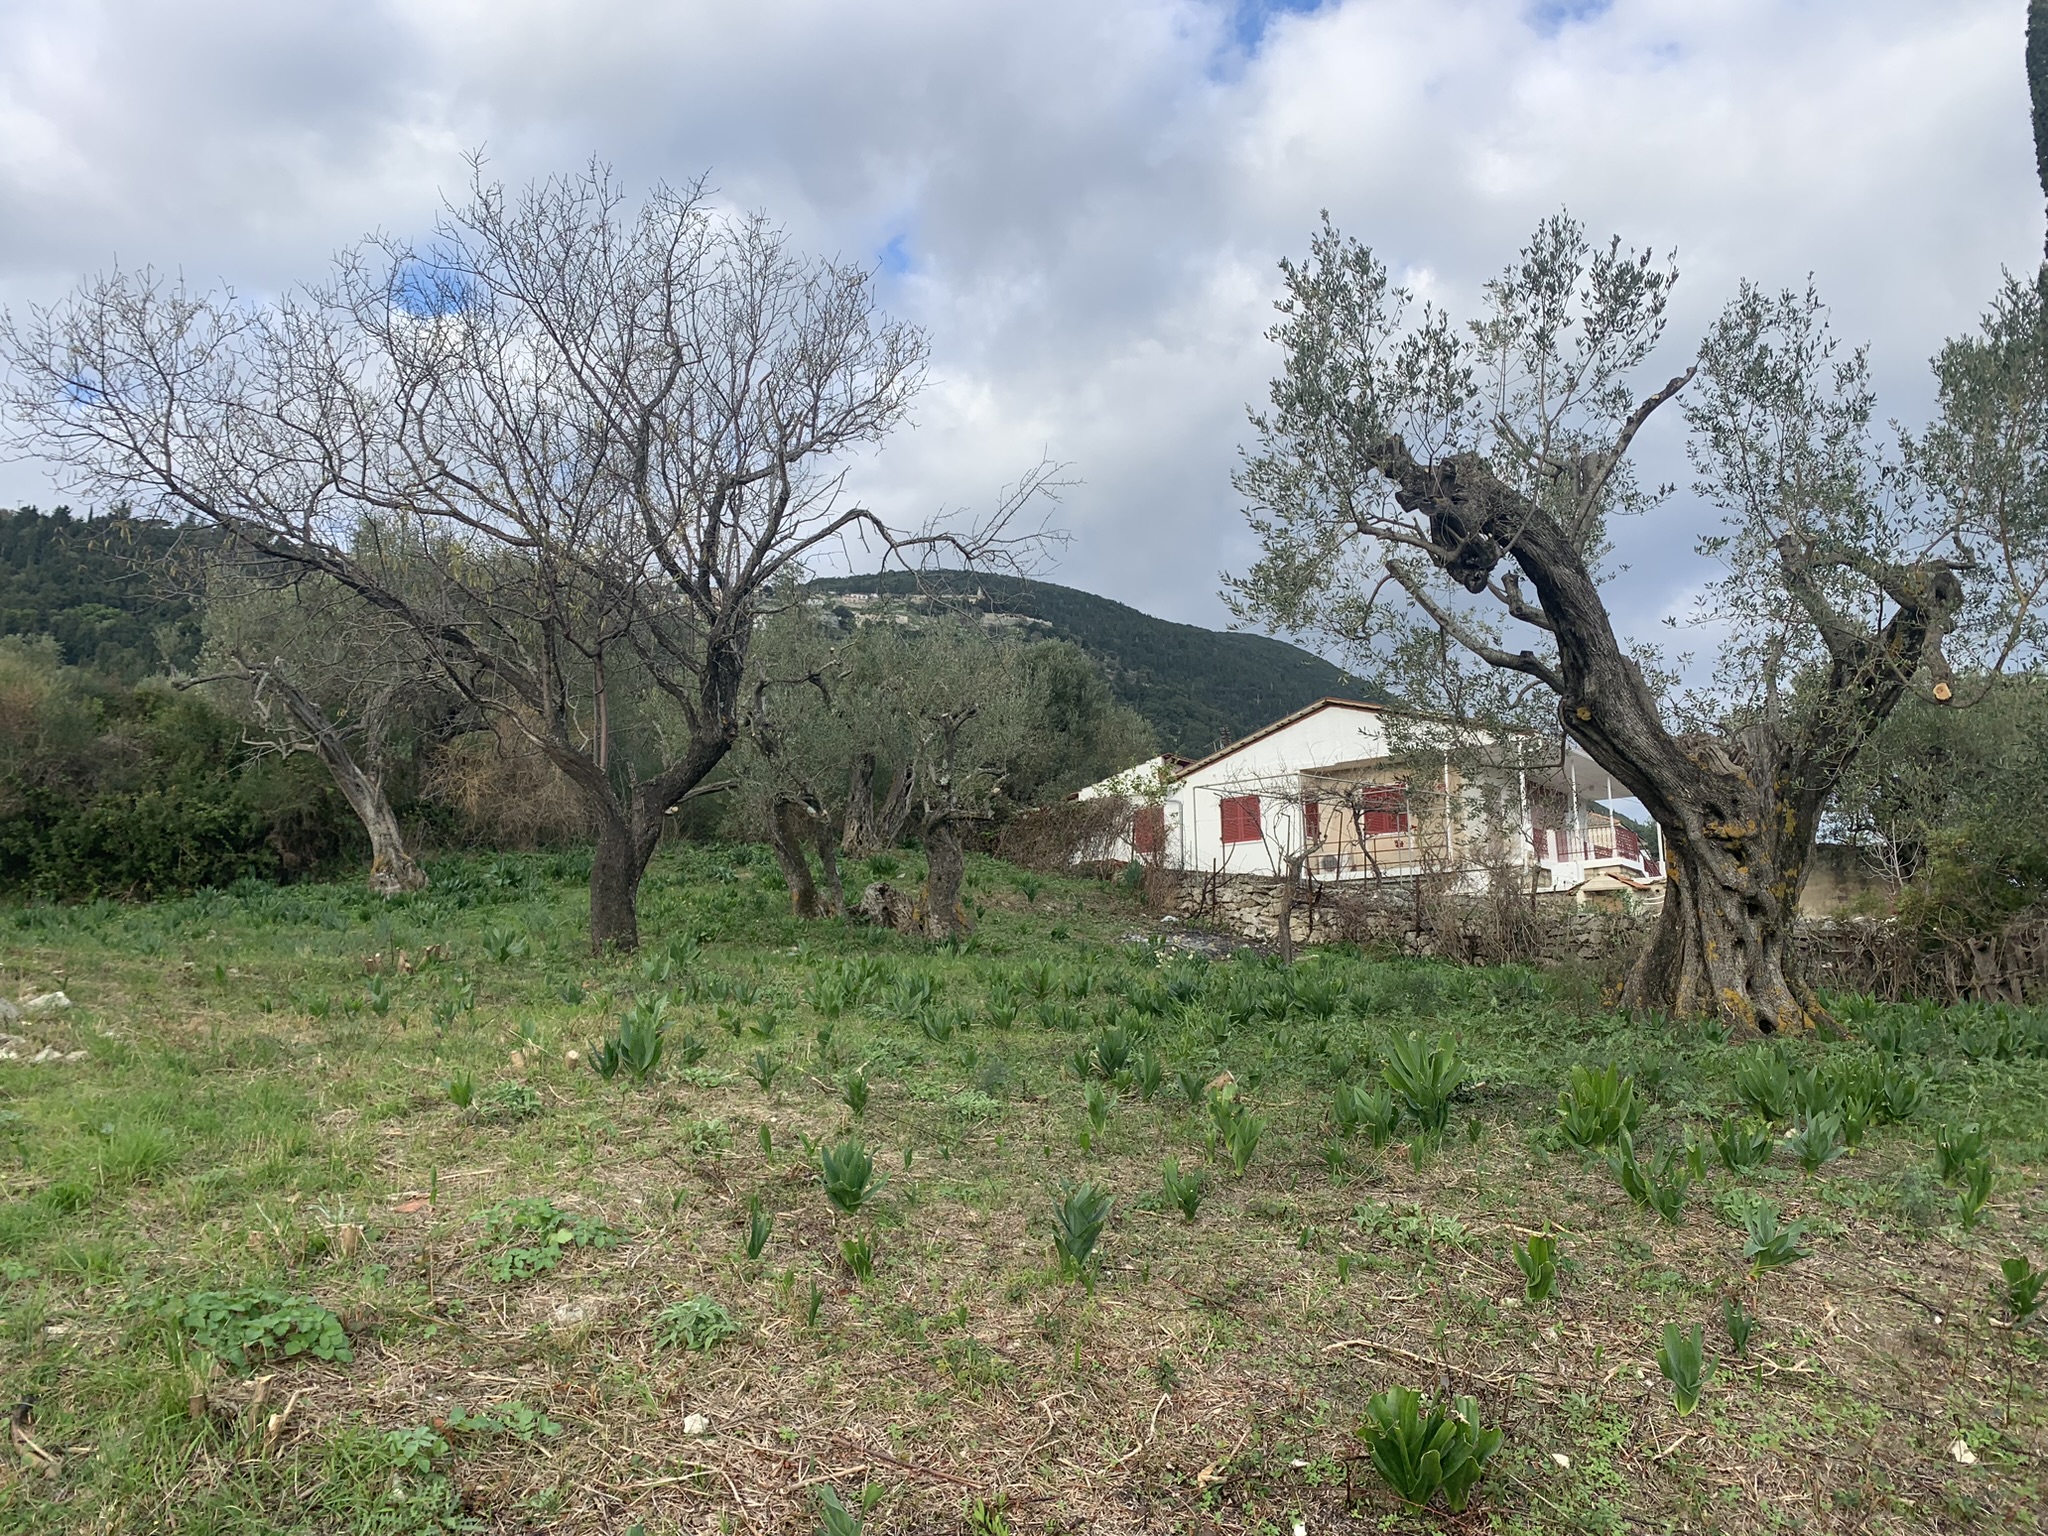 Terrain and landscape of land for sale, Ithaca Greece, Kolleri